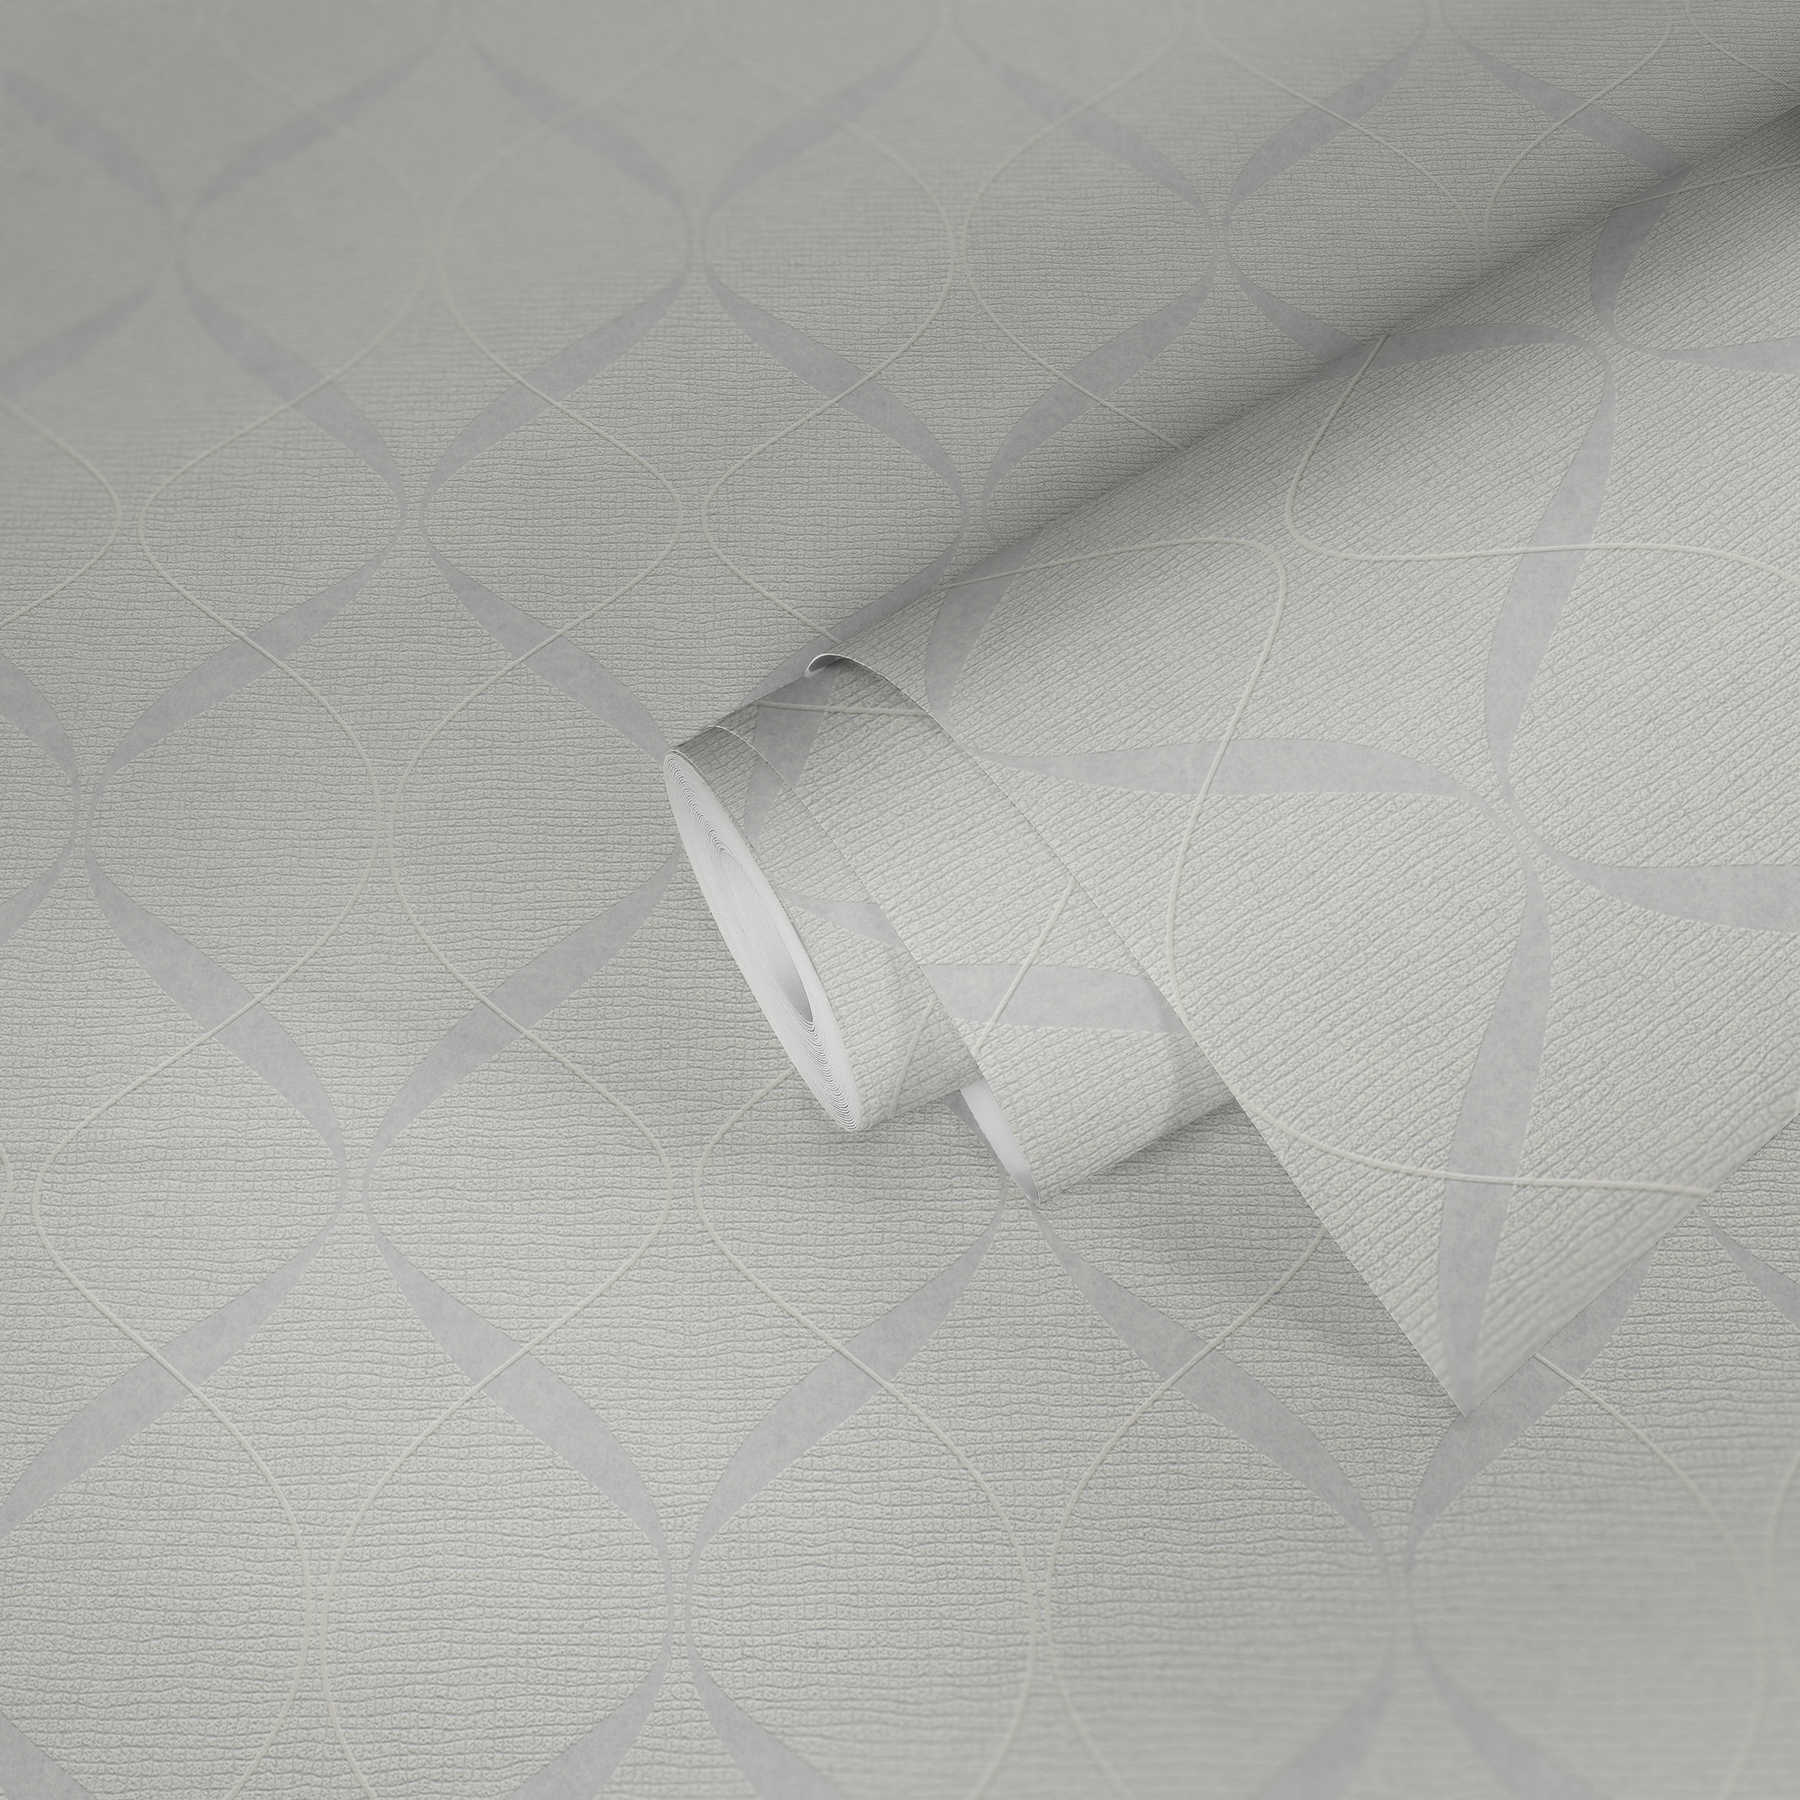             Non-woven wallpaper 3D textured pattern in 60s retro style - White
        